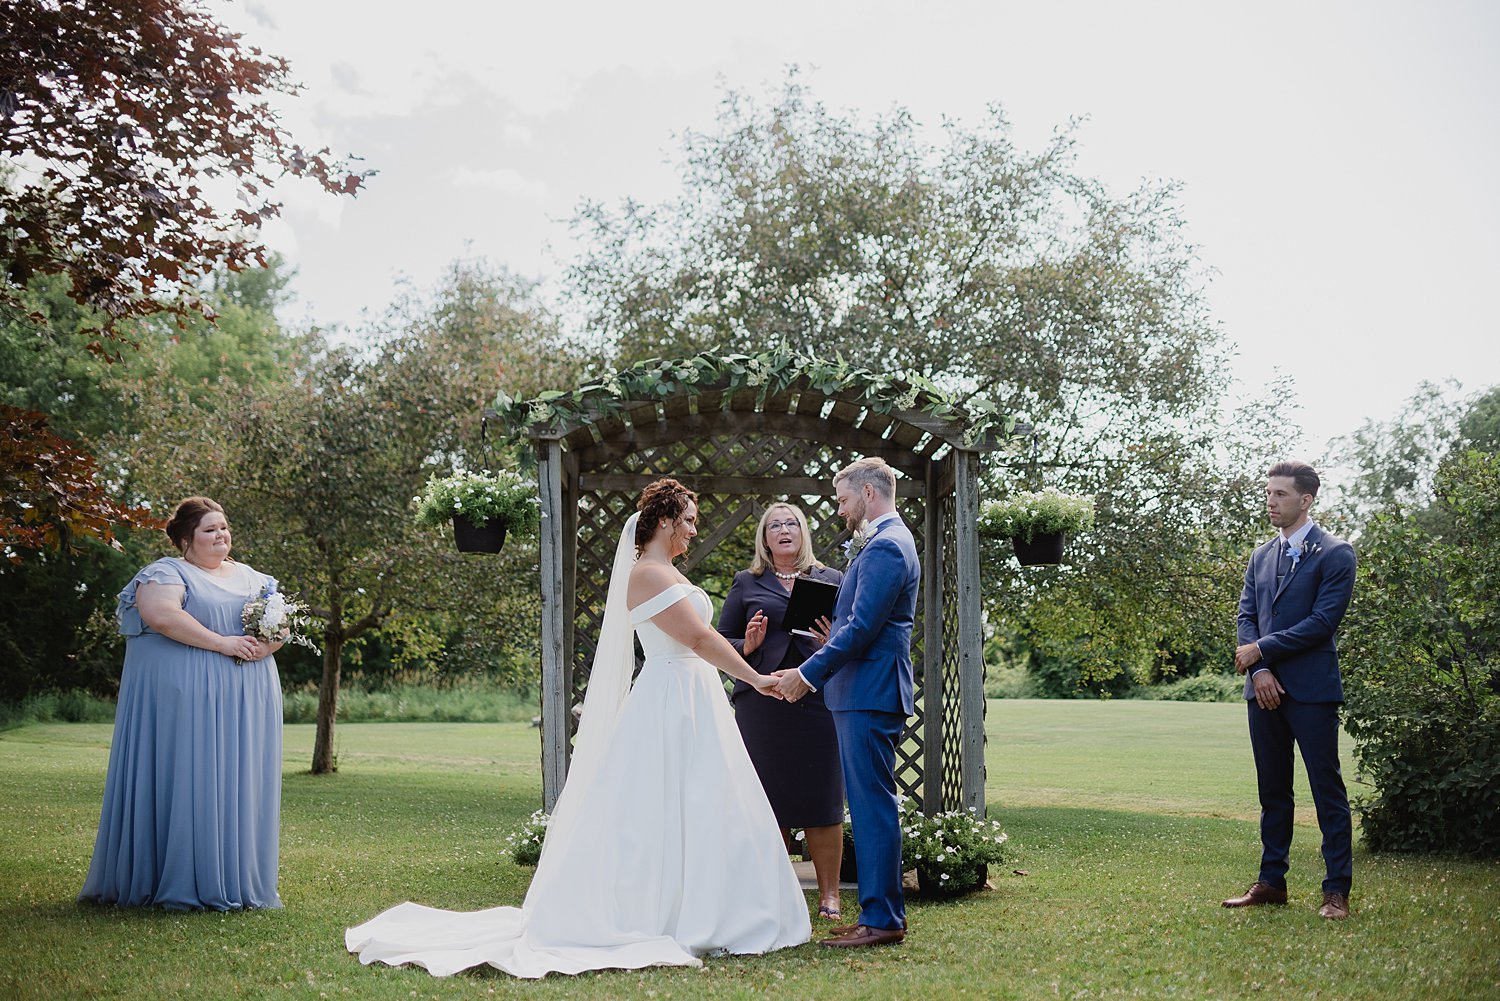 Elegant Summer Backyard Tented Wedding in Sydenham, Ontario | Prince Edward County Wedding Photographer | Holly McMurter Photographs_0048.jpg